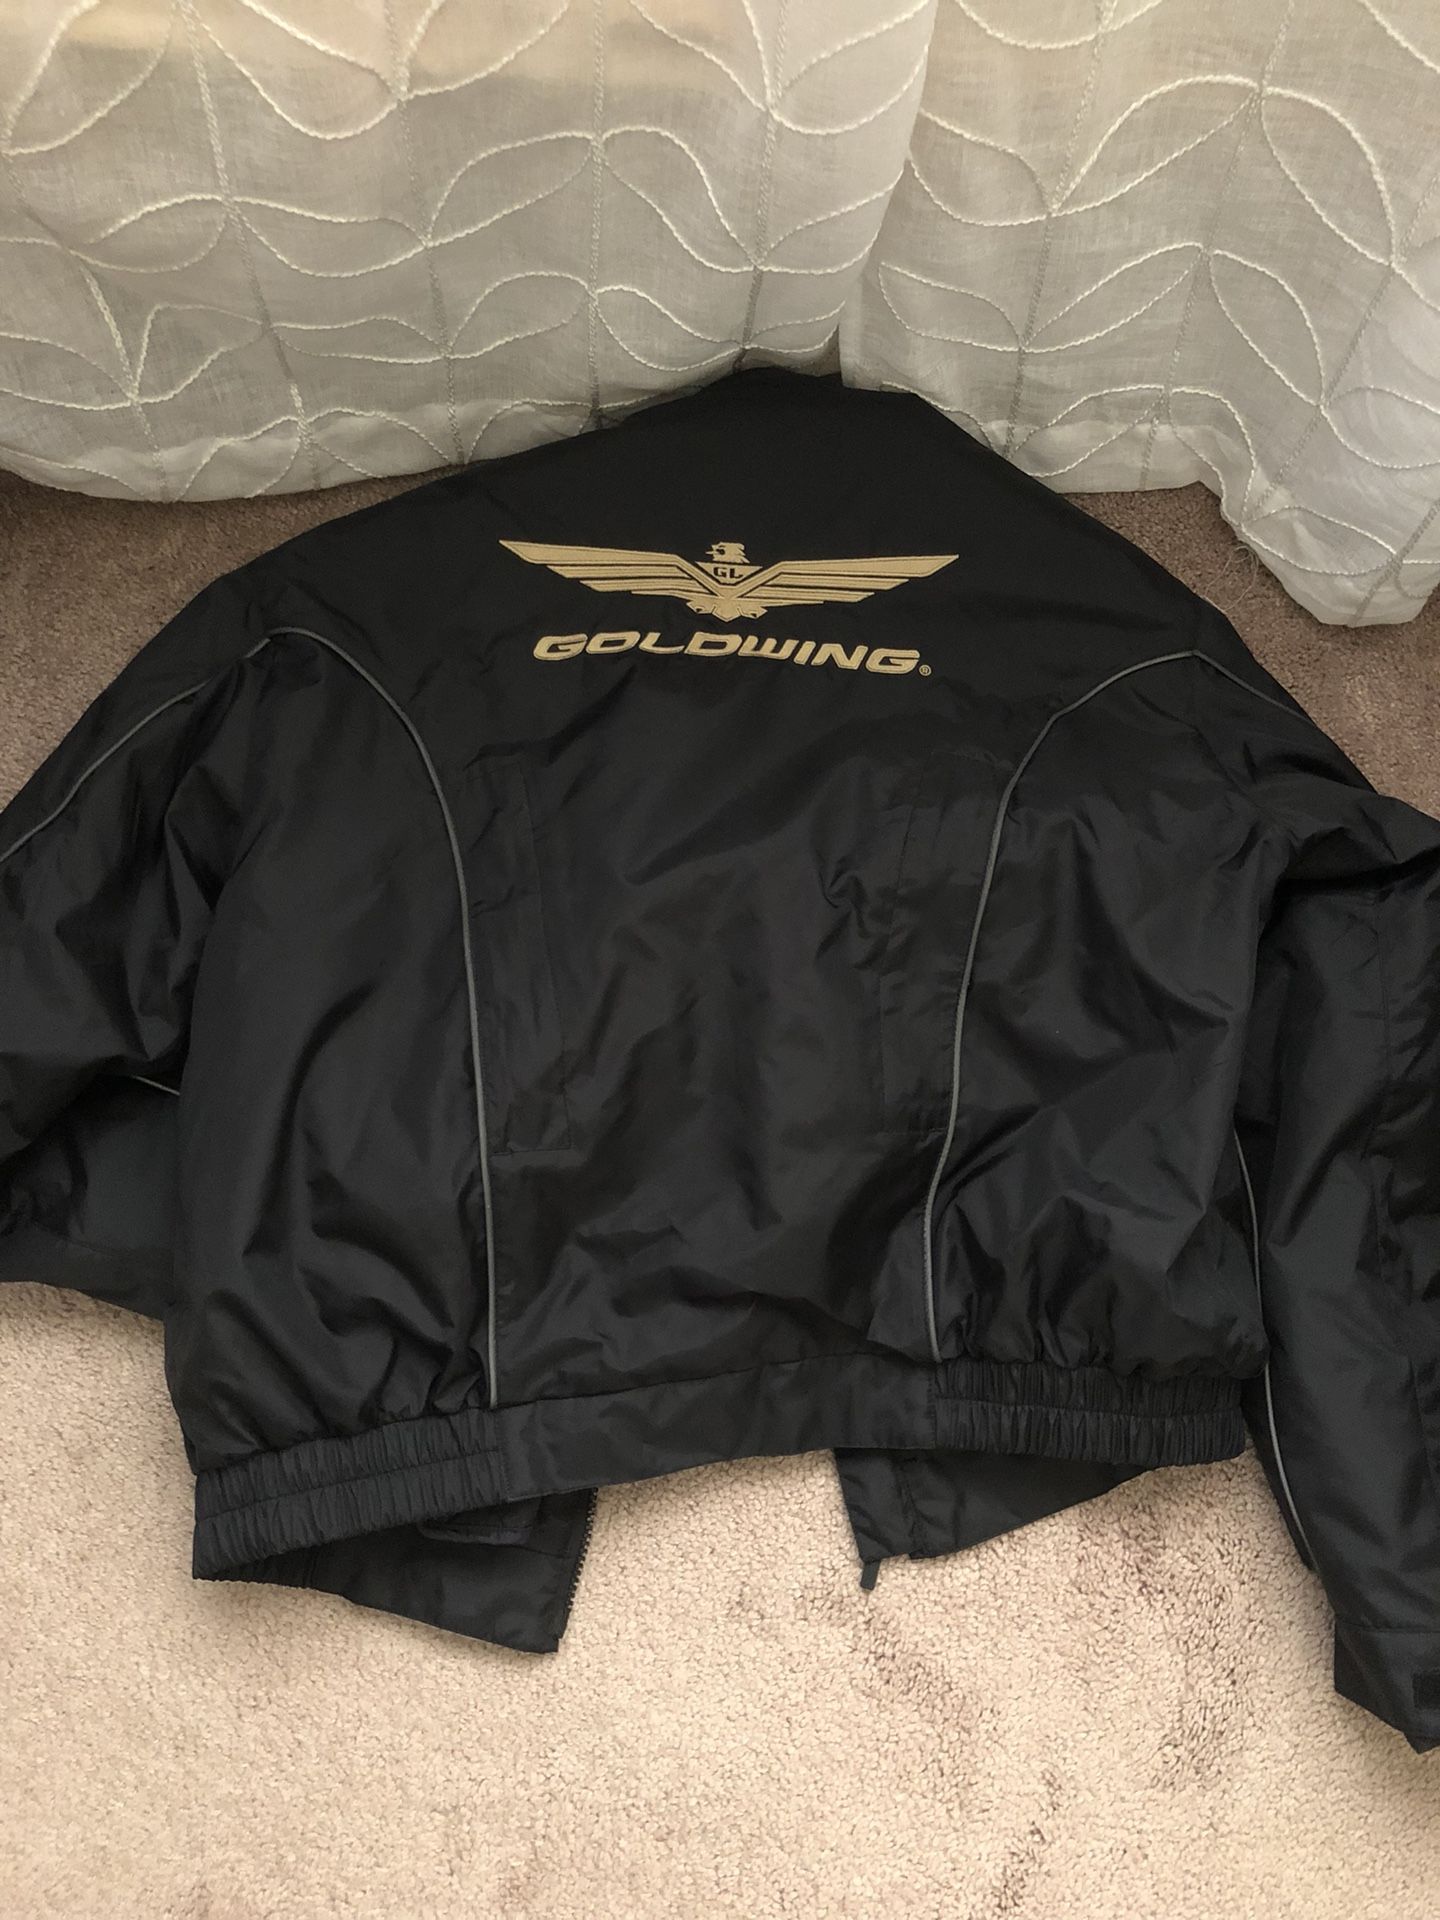 Honda Goldwing jacket for men